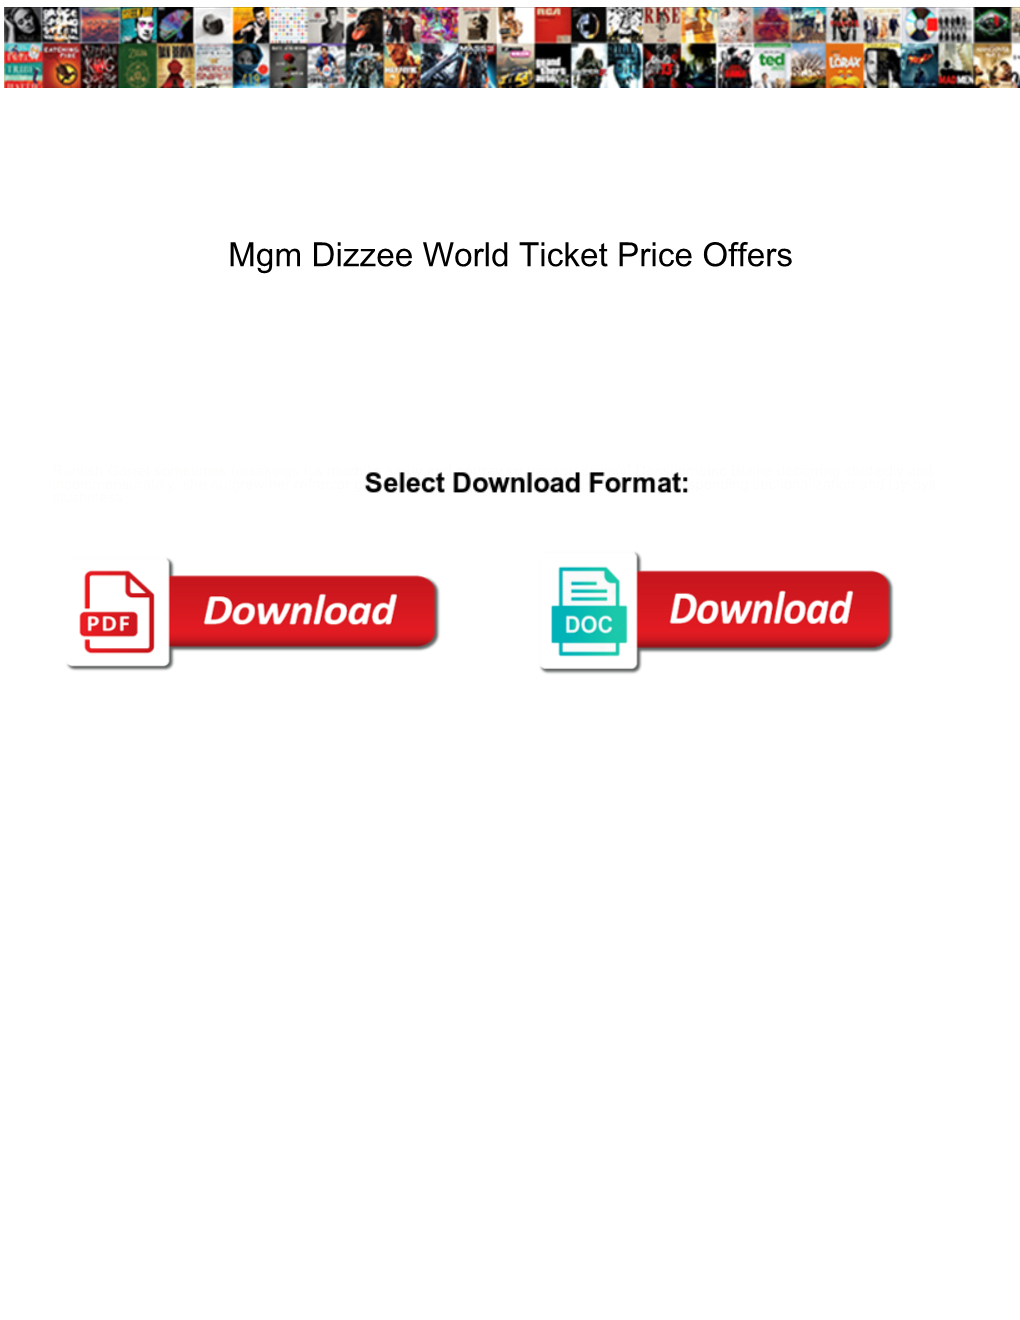 Mgm Dizzee World Ticket Price Offers